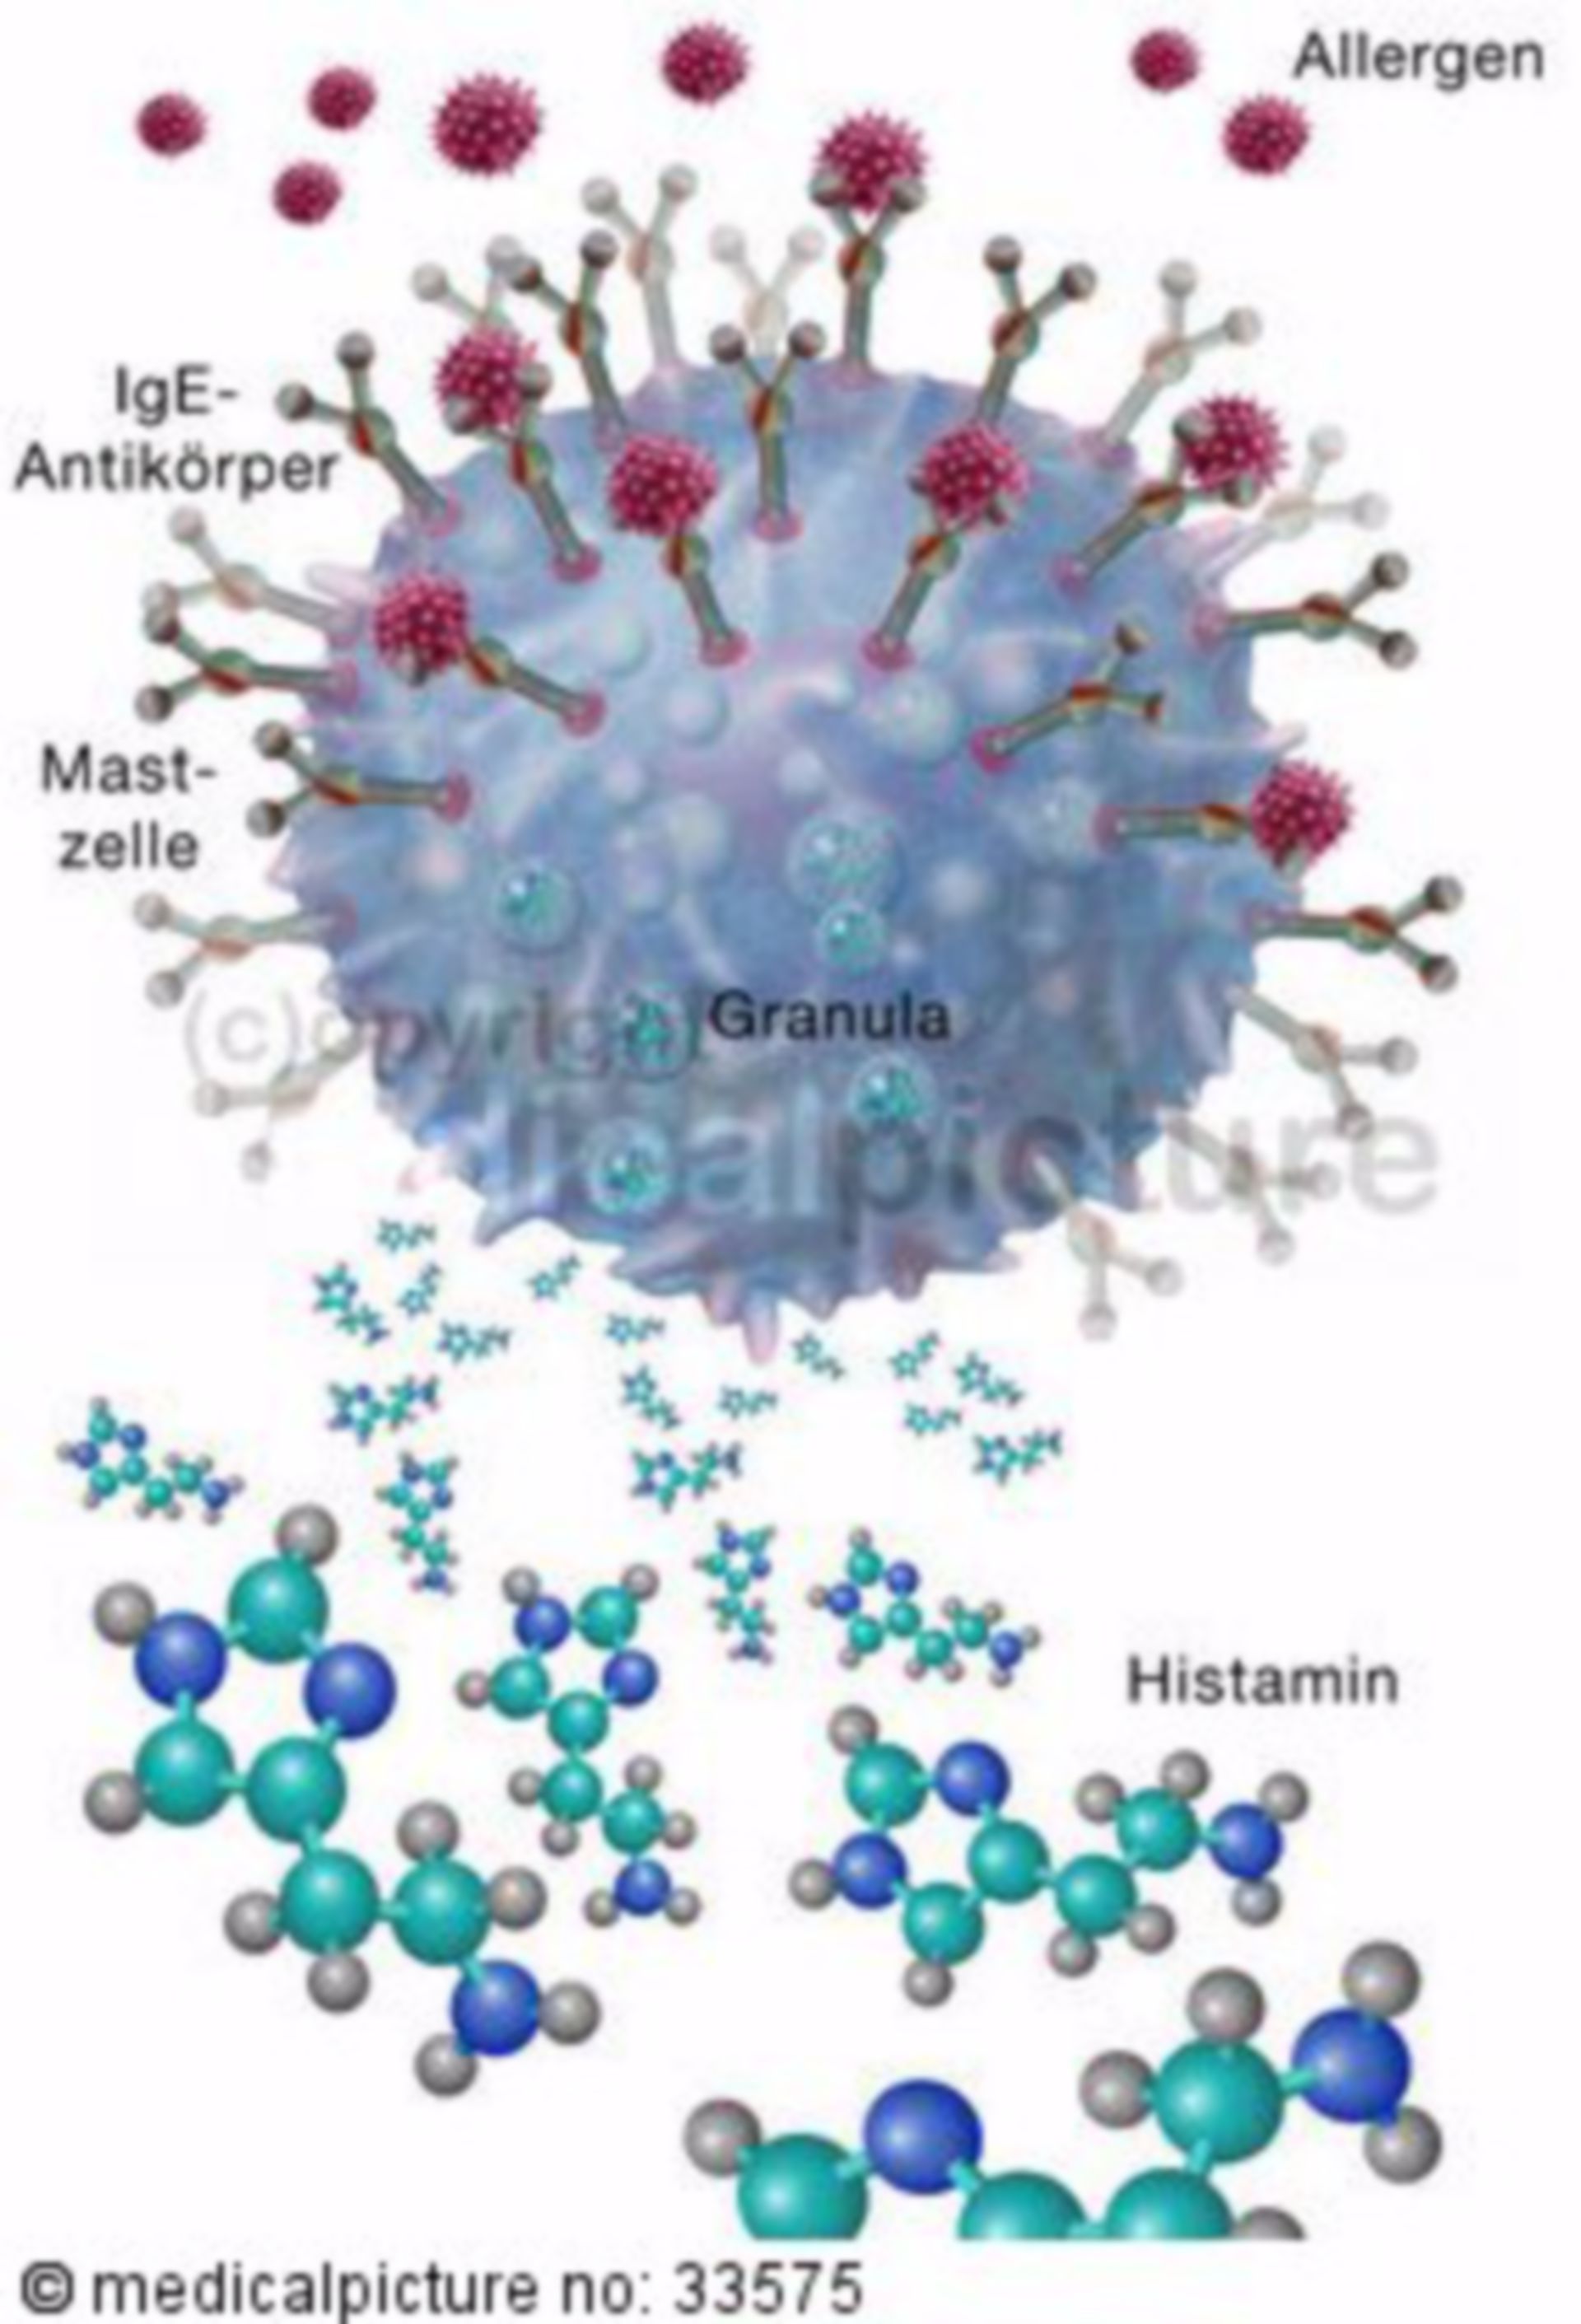  Allergische Reaktion, Histaminbildung 
